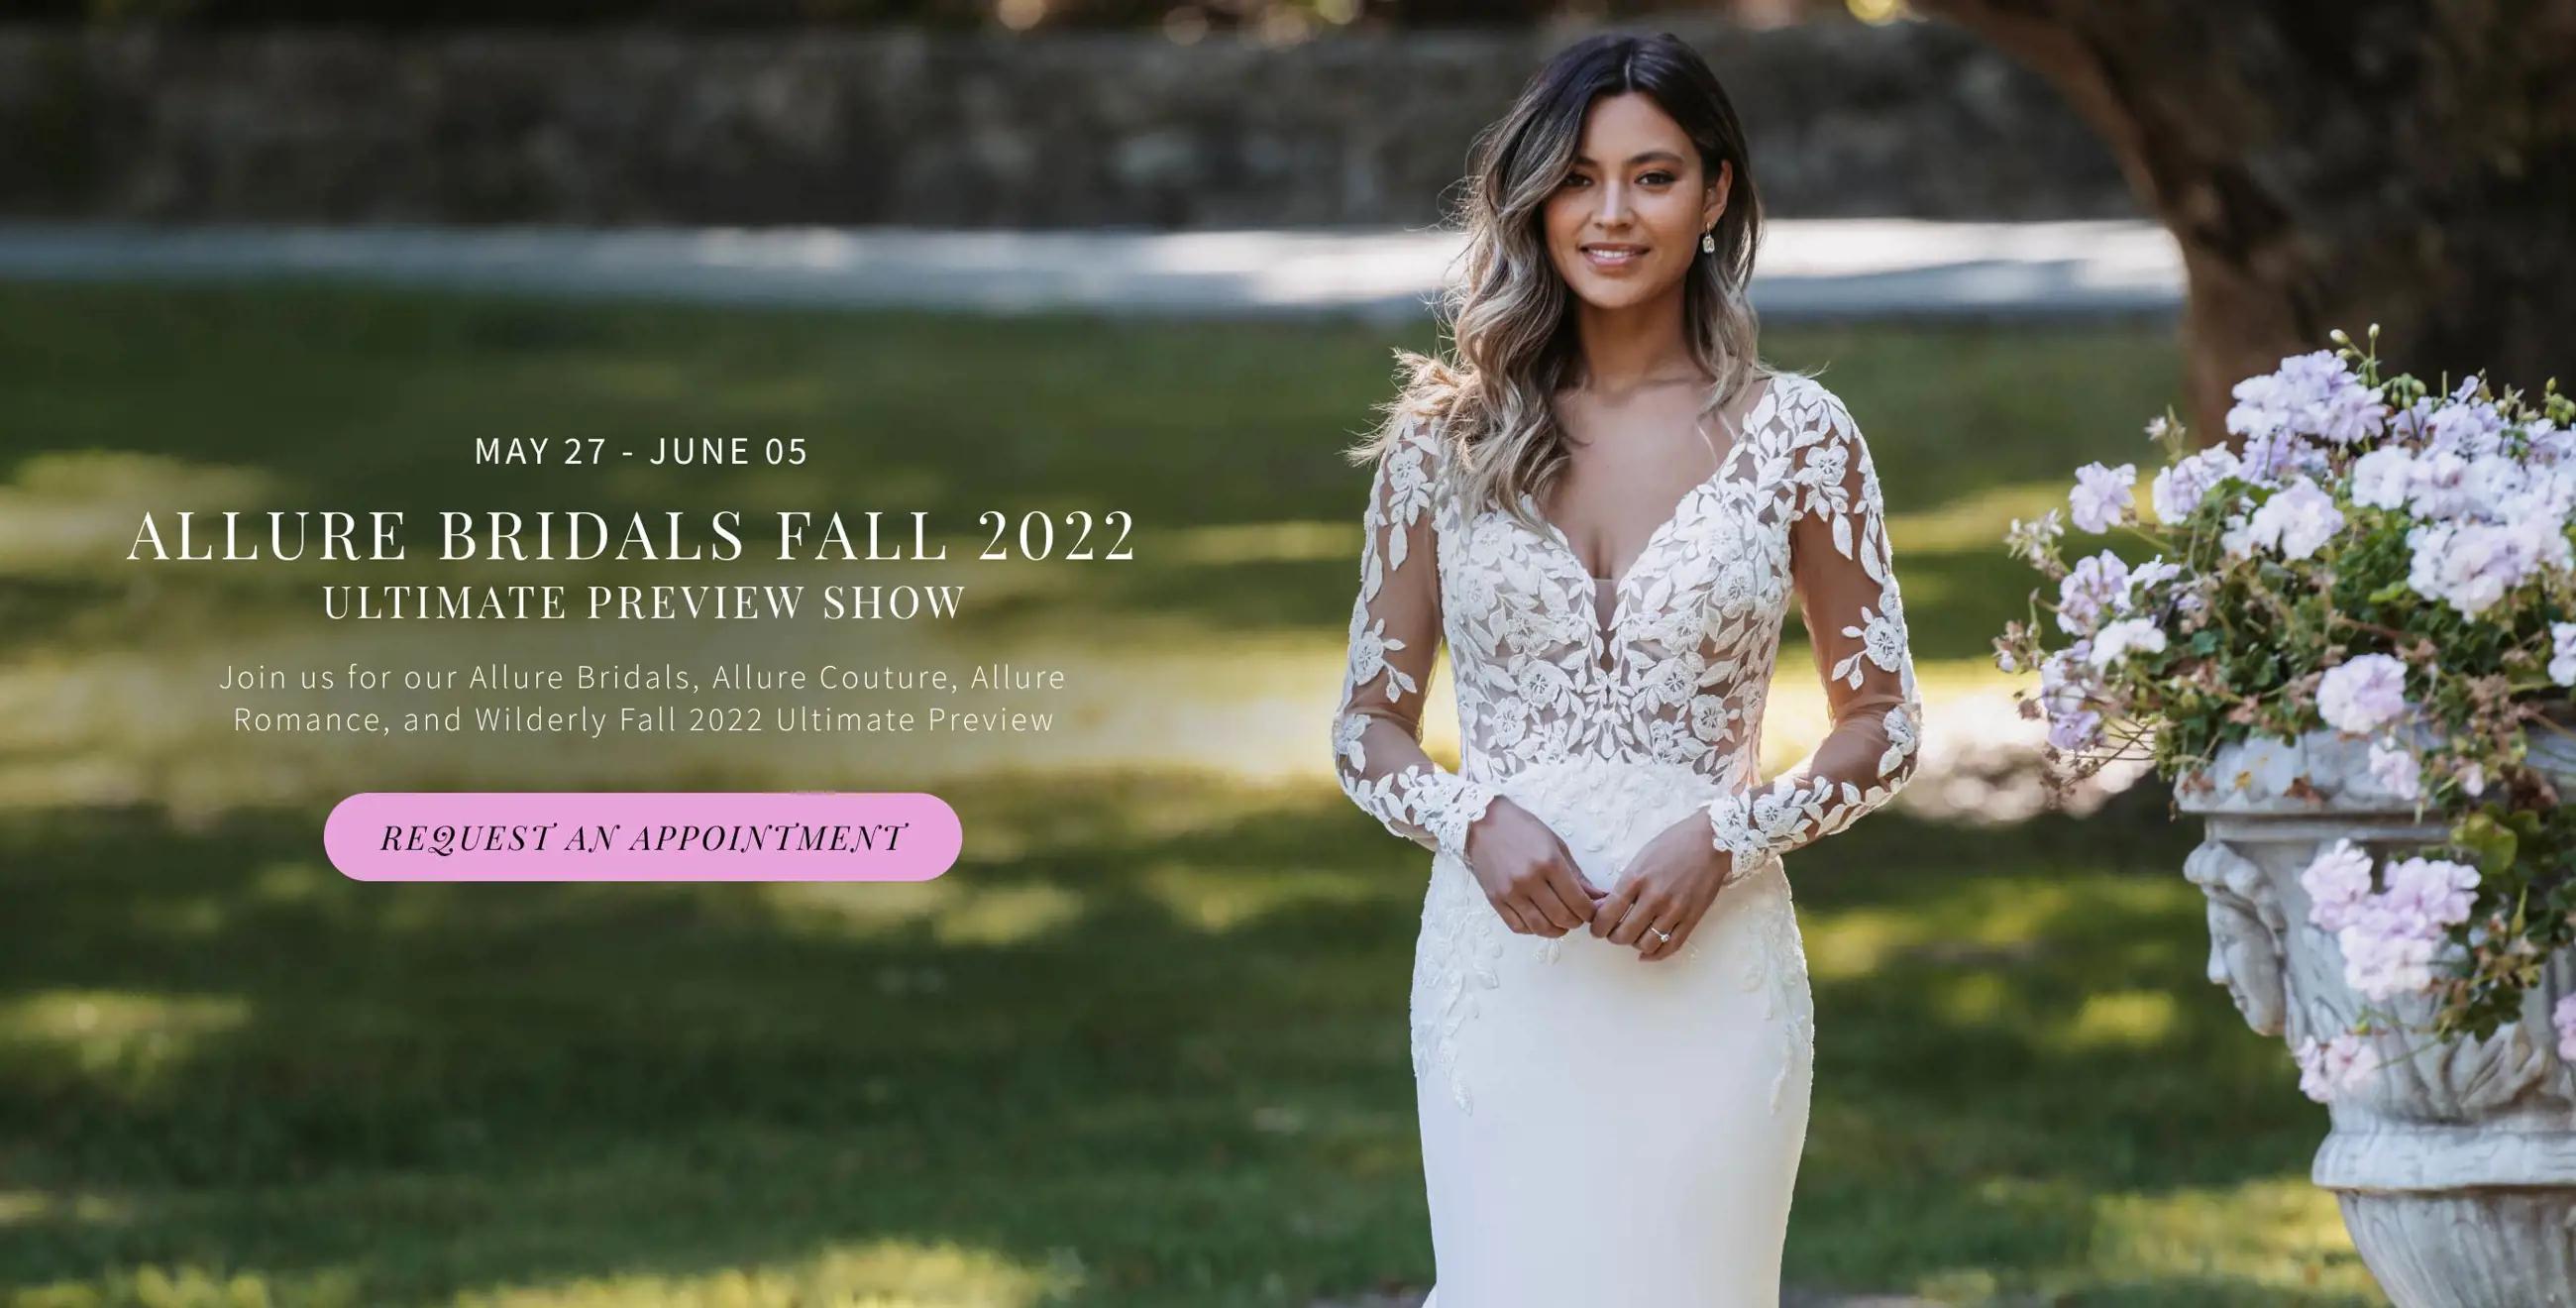 Allure Bridals Fall 2022 Ultimate Preview Show. Trudys Brides. Desktop image.